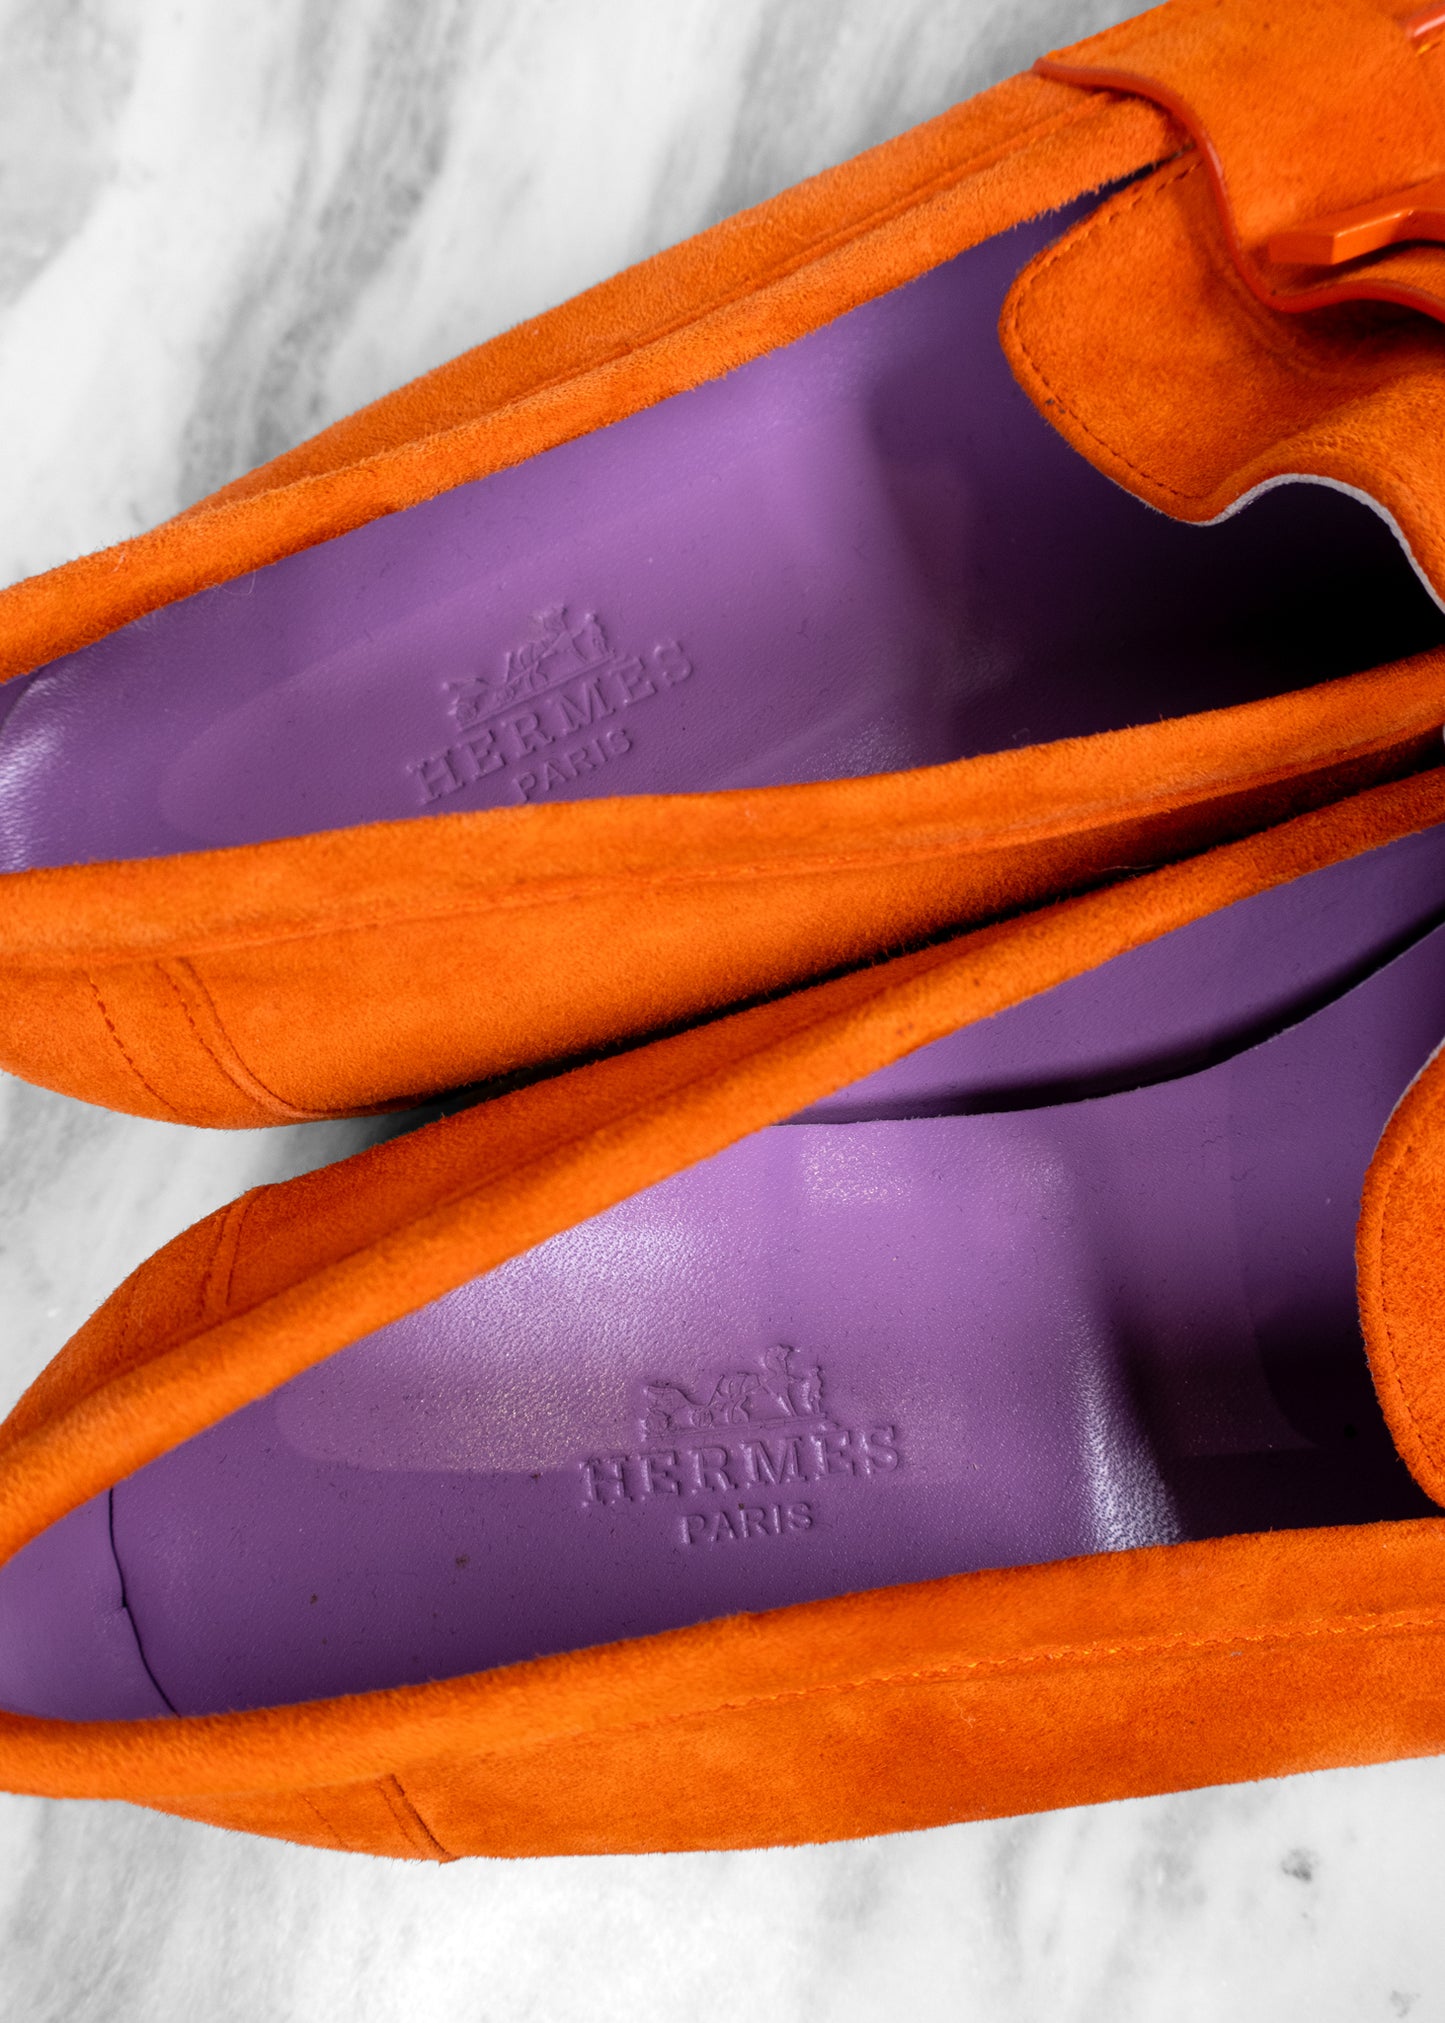 Hermès Orange Suede Paris Loafers